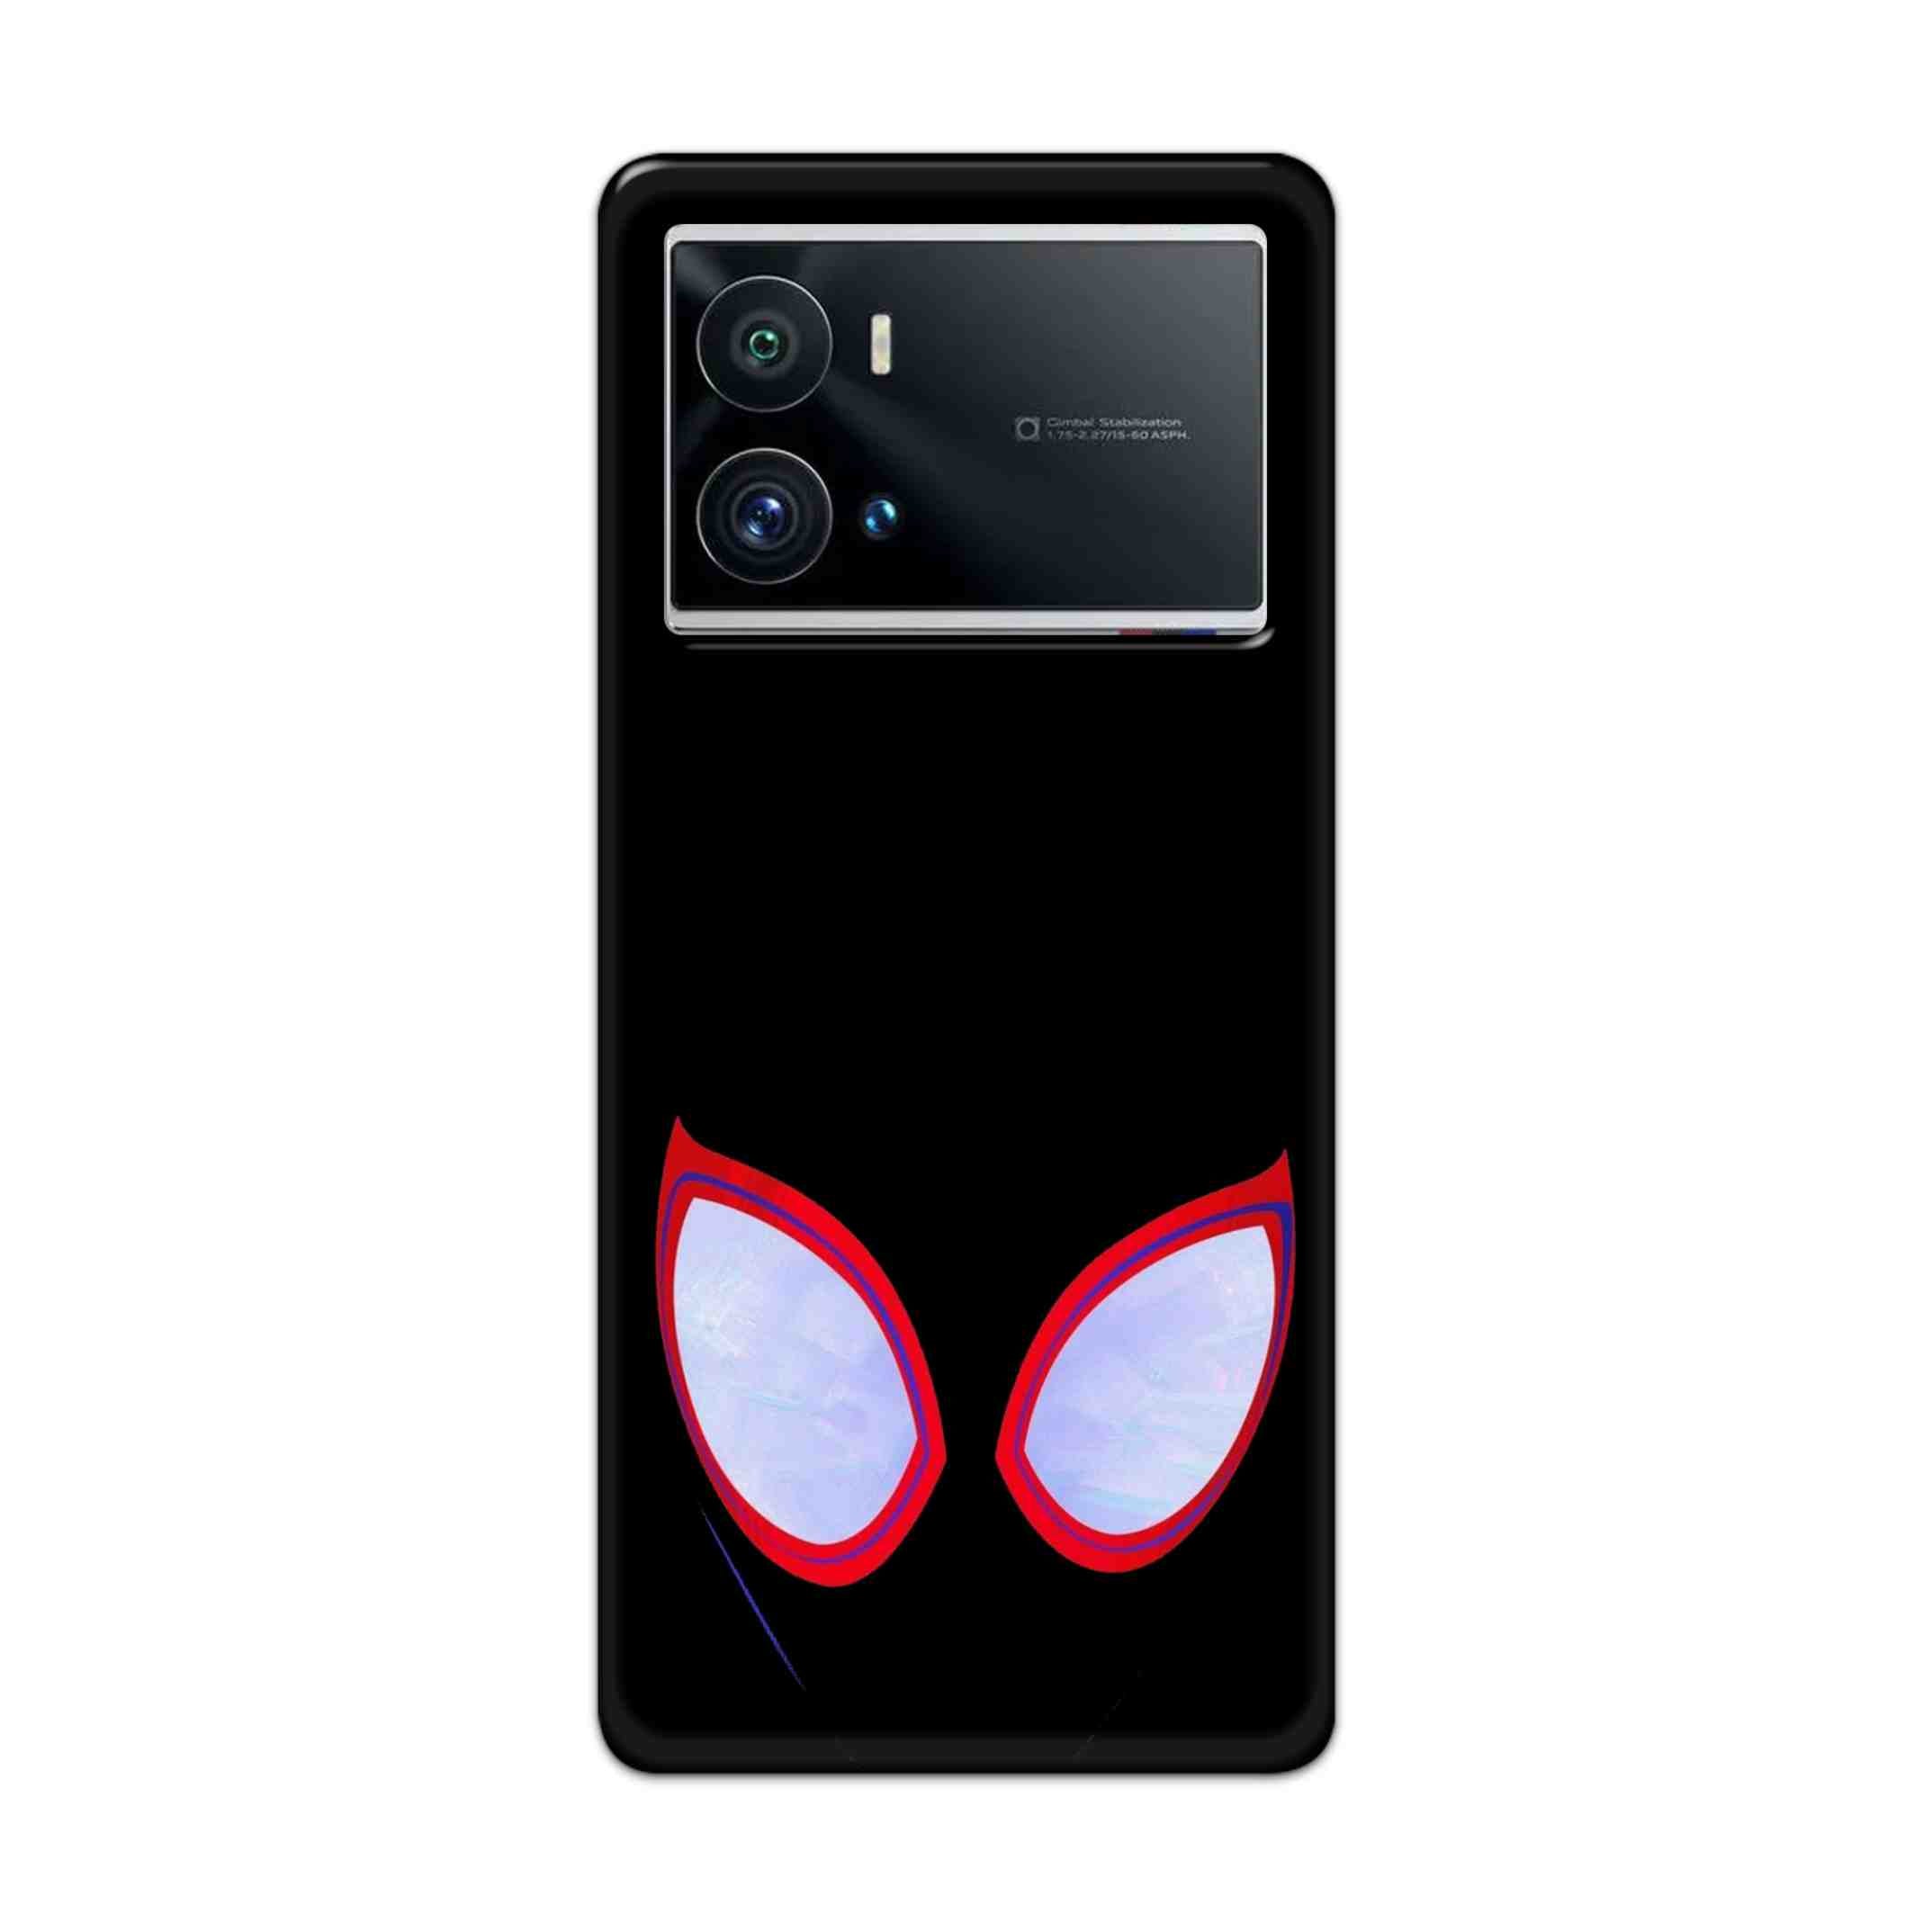 Buy Spiderman Eyes Hard Back Mobile Phone Case Cover For iQOO 9 Pro 5G Online